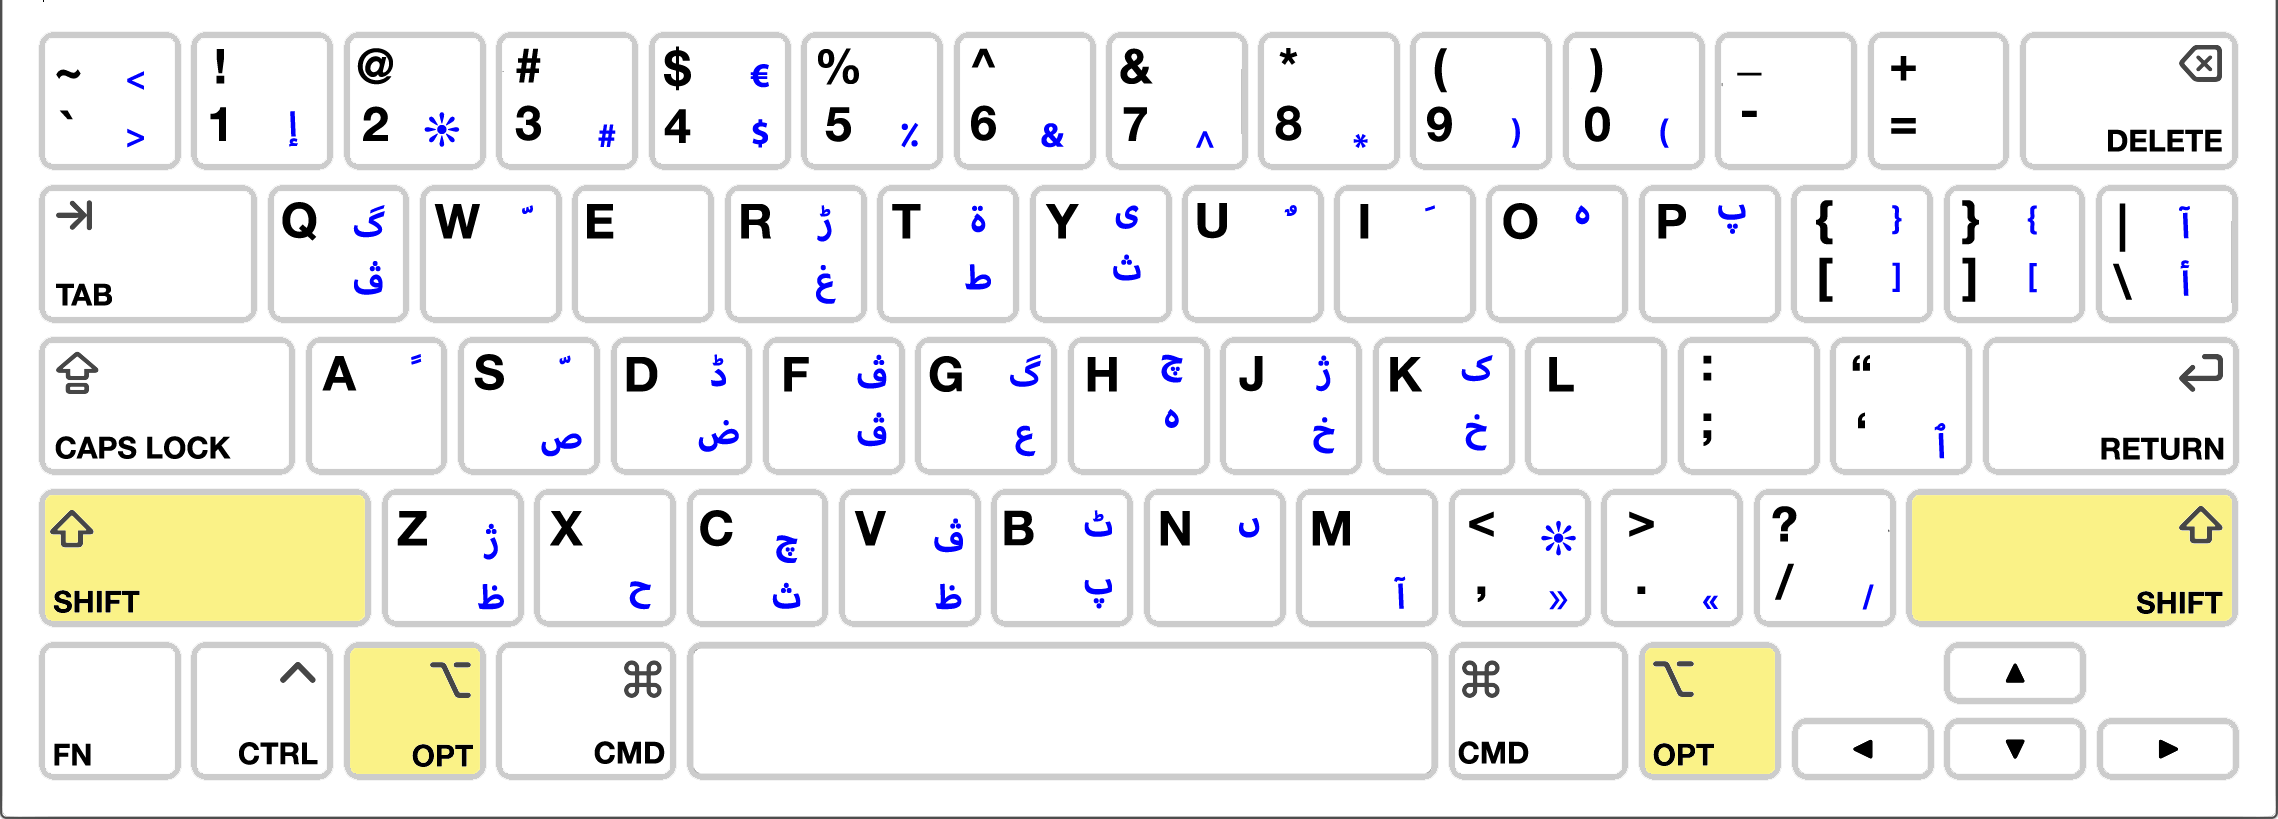 Arabic Option Keyboard Layout